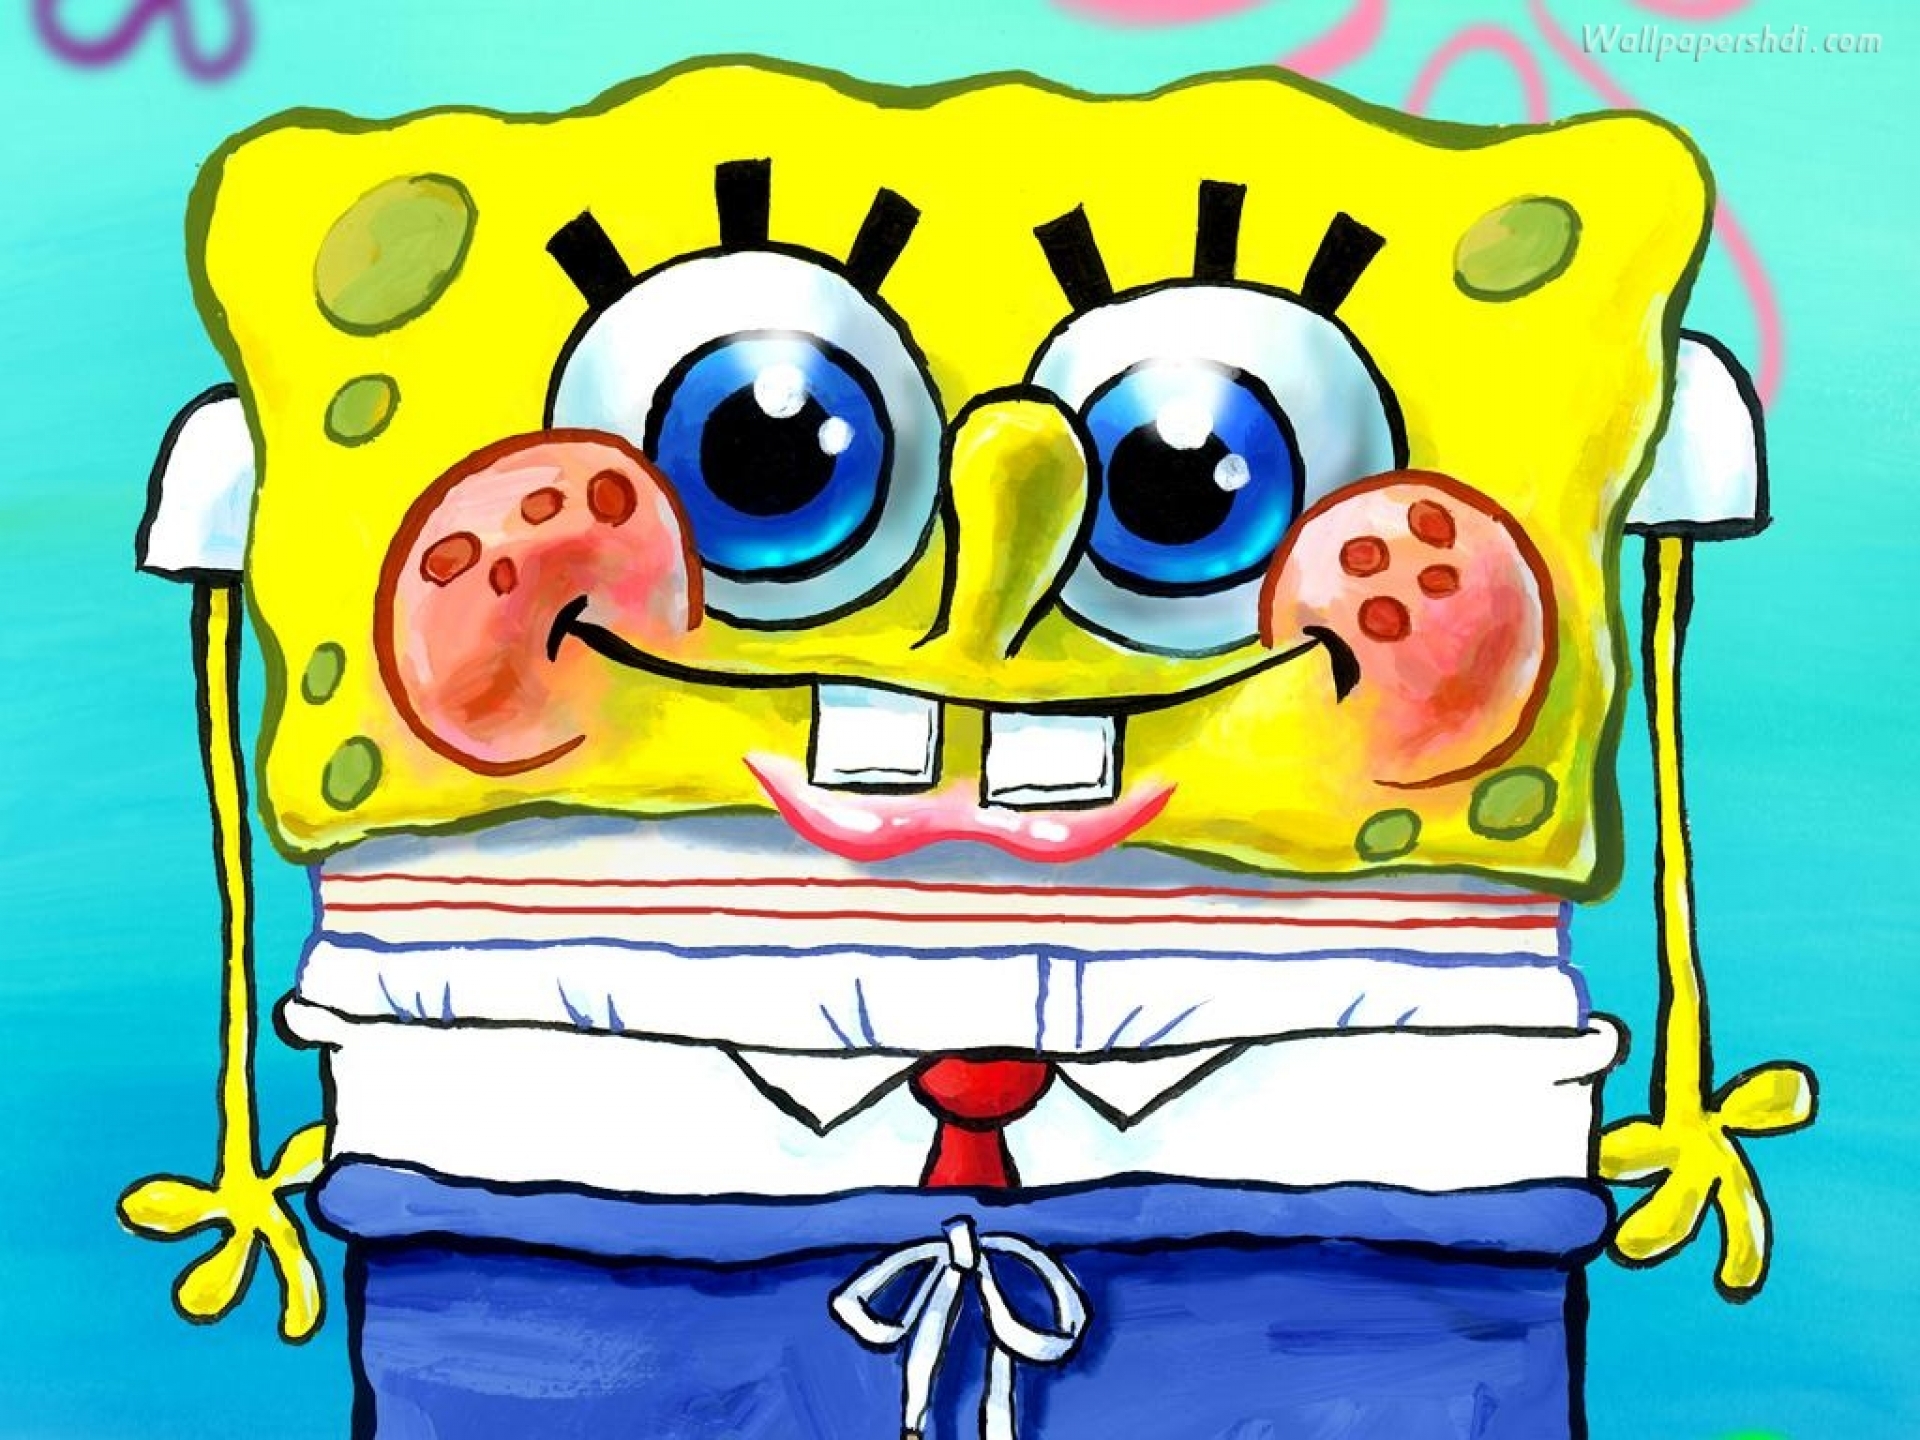 Extraordinary Spongebob Cute Embrassed in Check Blue Pants Underwater Cartoon Wallpapers for Phones